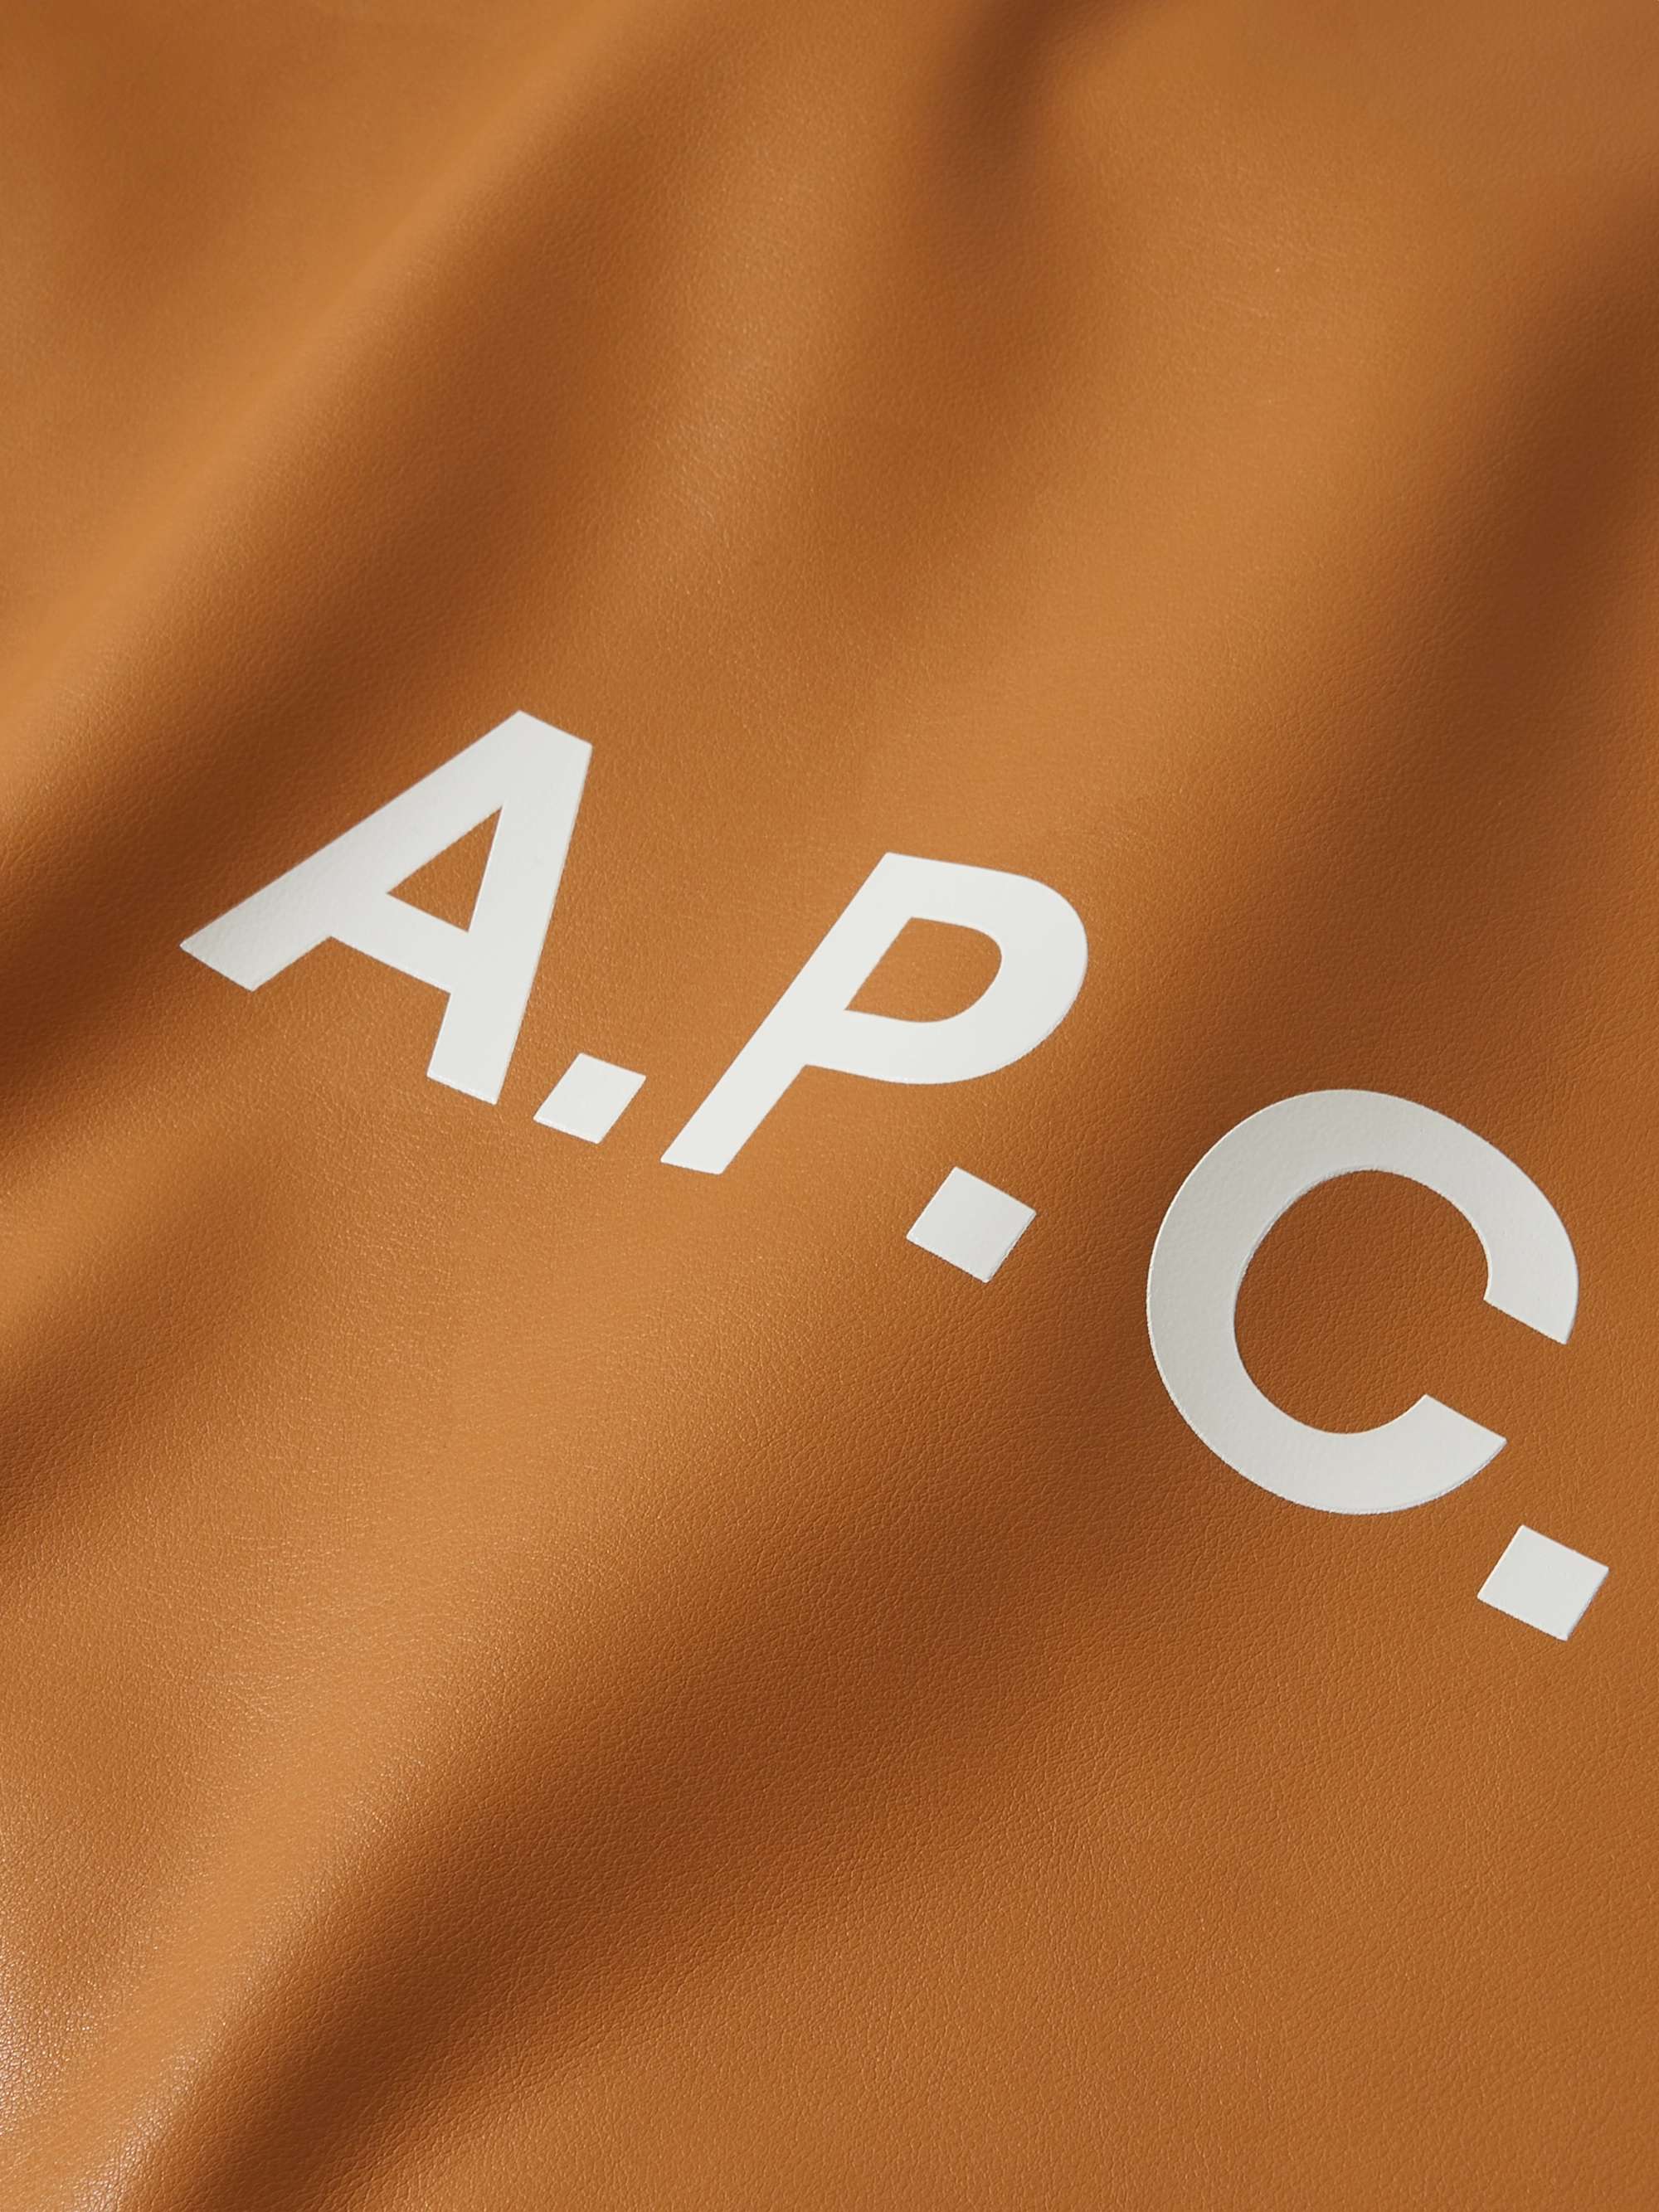 A.P.C. Ninon Logo-Print Faux Leather Tote